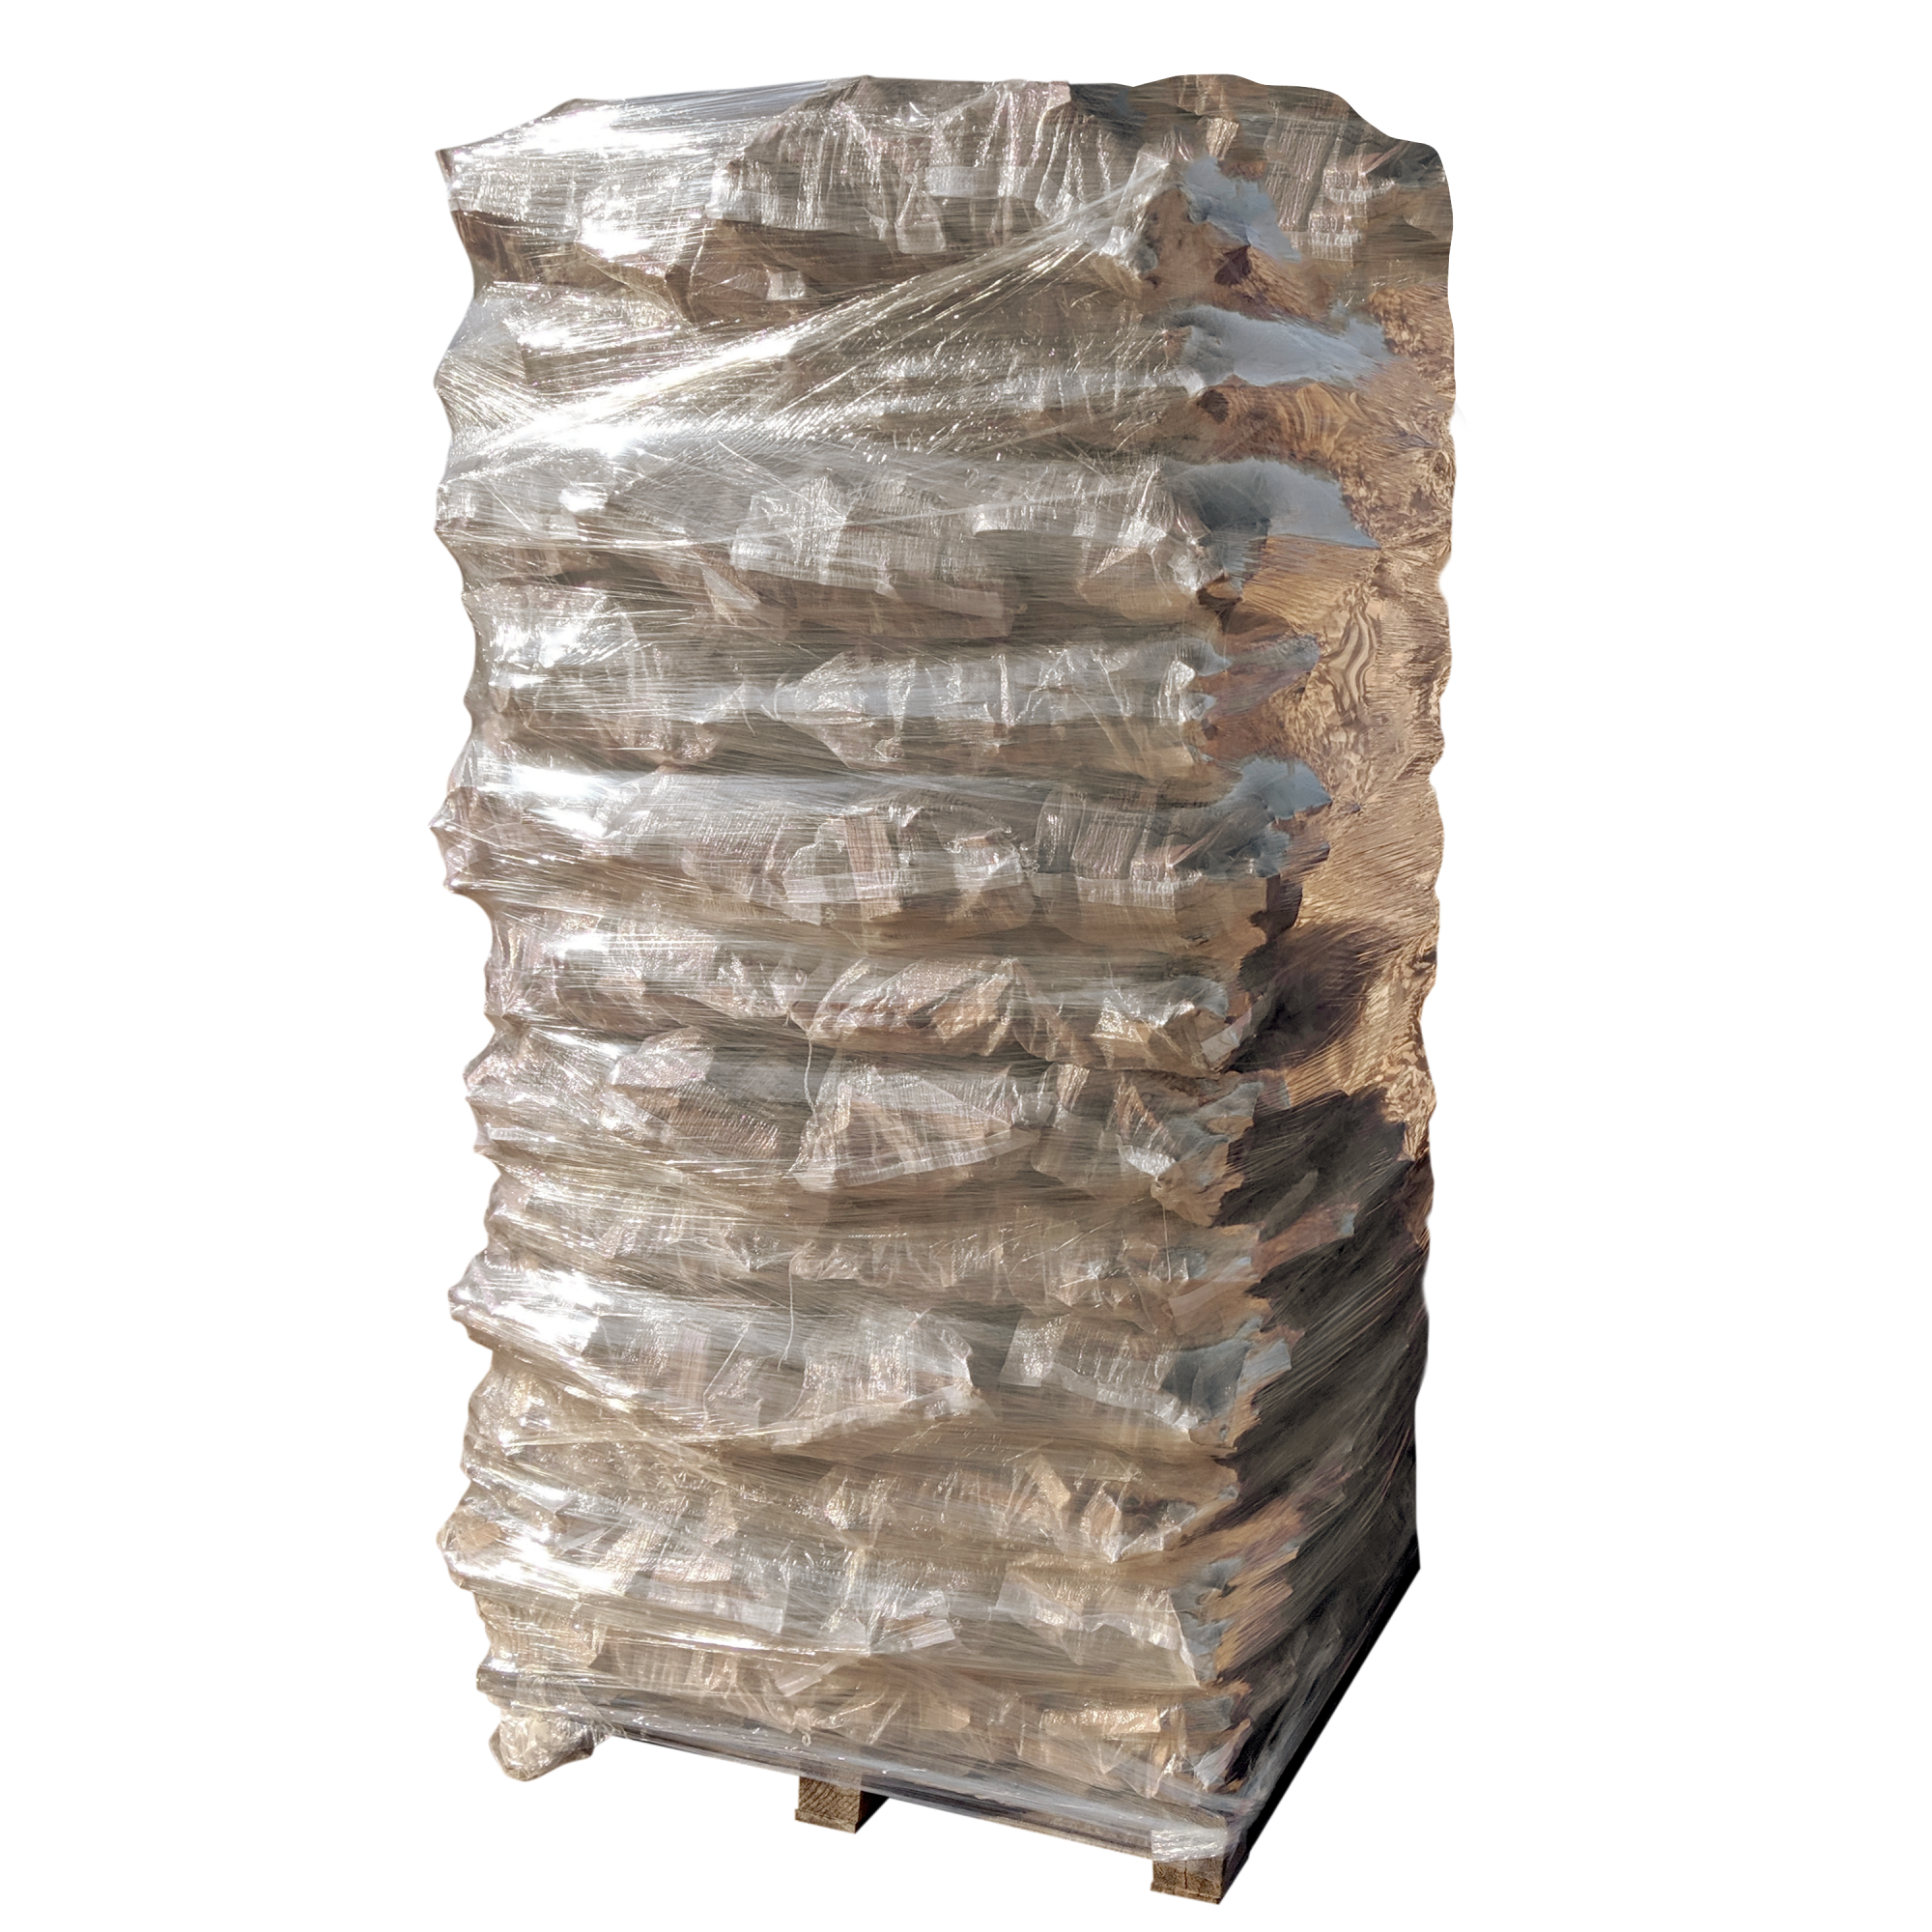 Palet de sacos de piña de encendido leñas oliver de 520 kg